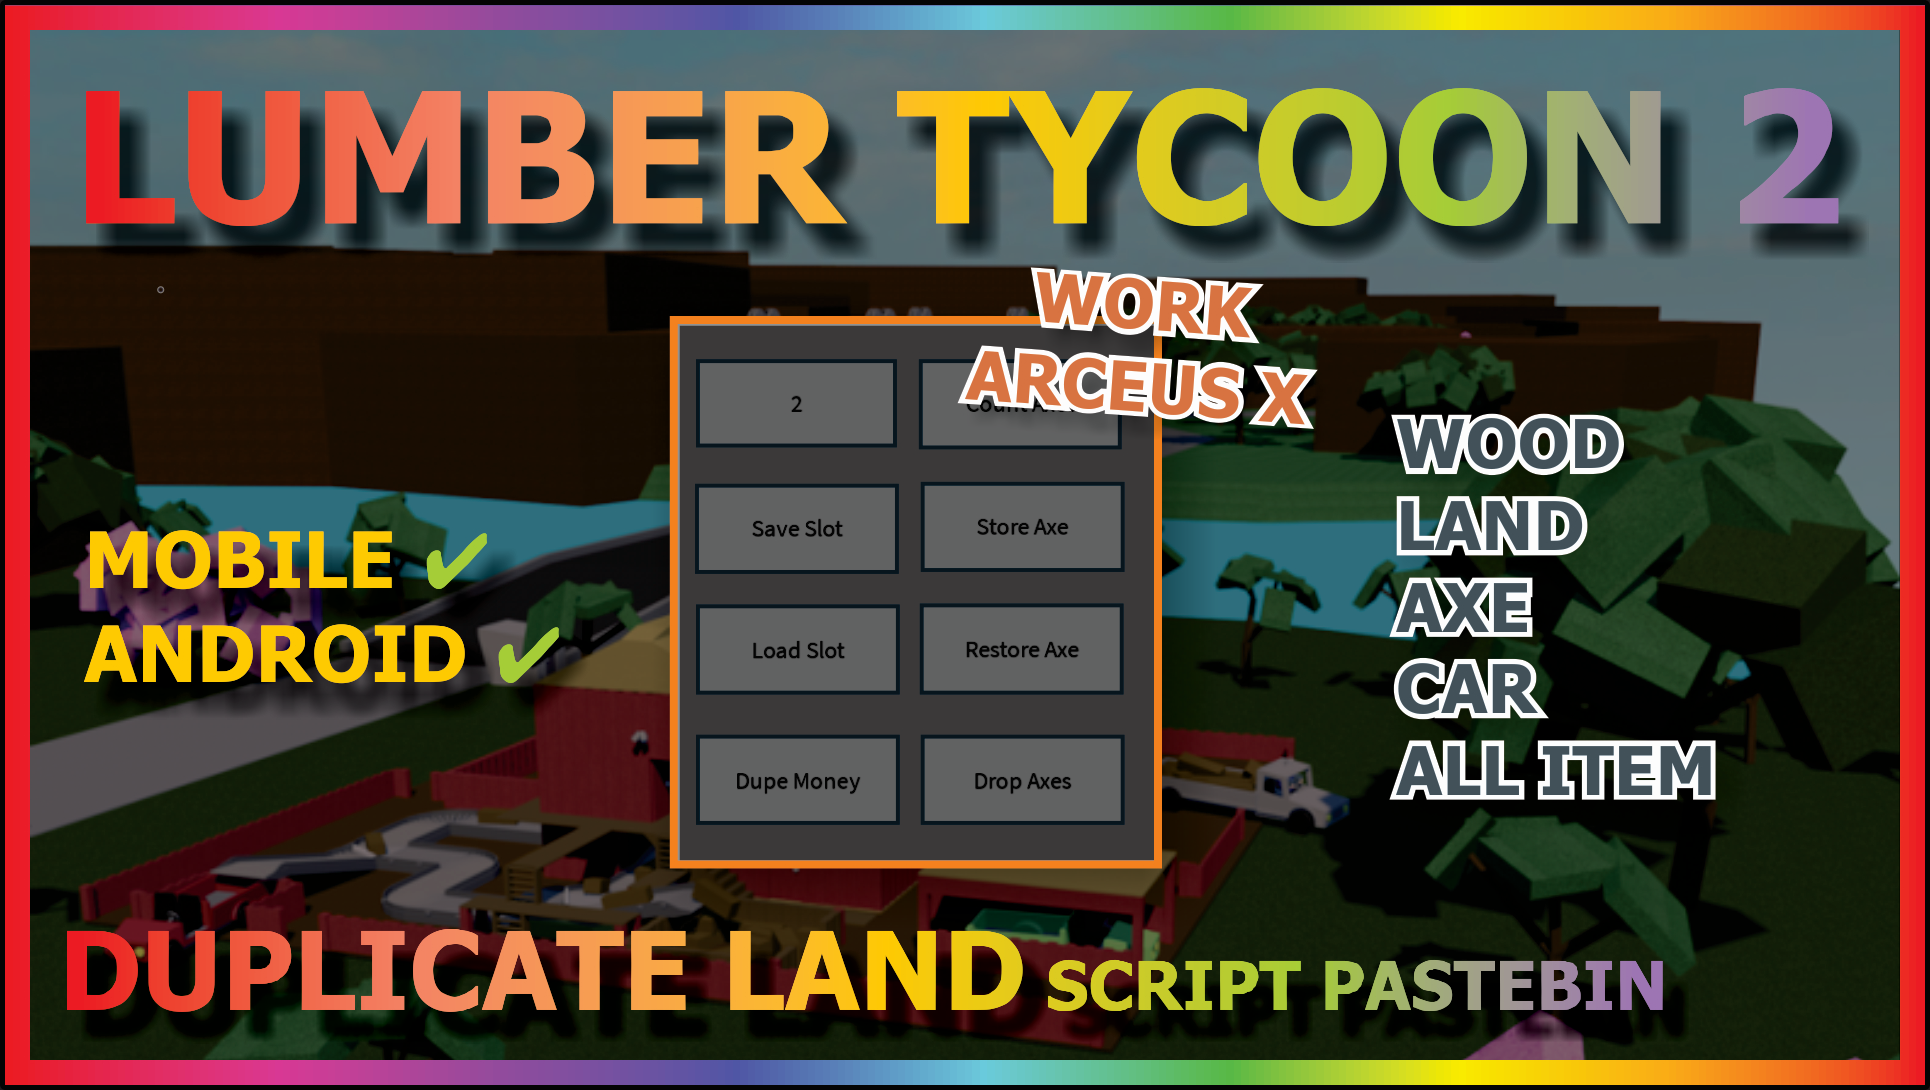 Lumber tycoon script. Скрипт на Ламбер ТАЙКУН 2. Скрипты на Lumber Tycoon 2. Lumber Tycoon 2 script. Lumber Tycoon 2 script dupe.